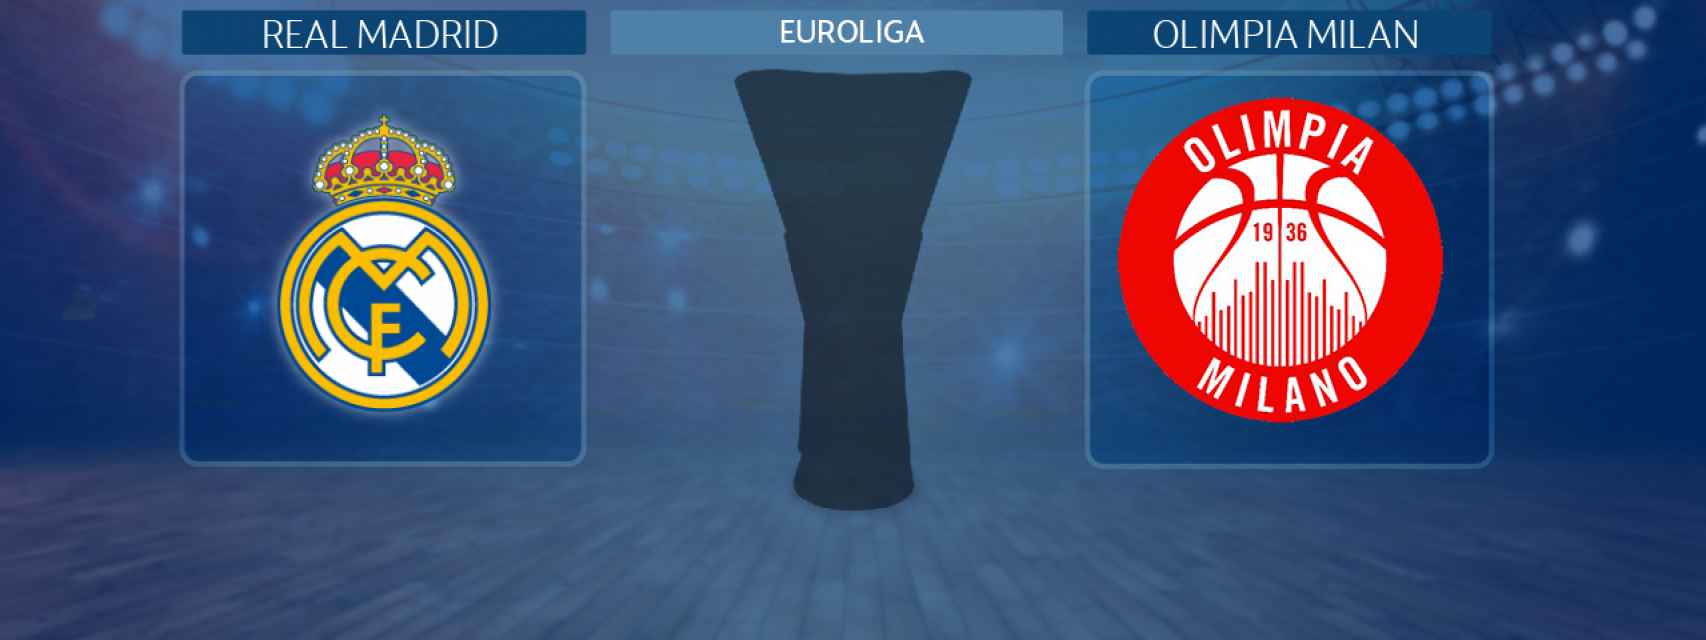 Real Madrid - Olimpia Milan, partido de la Euroliga